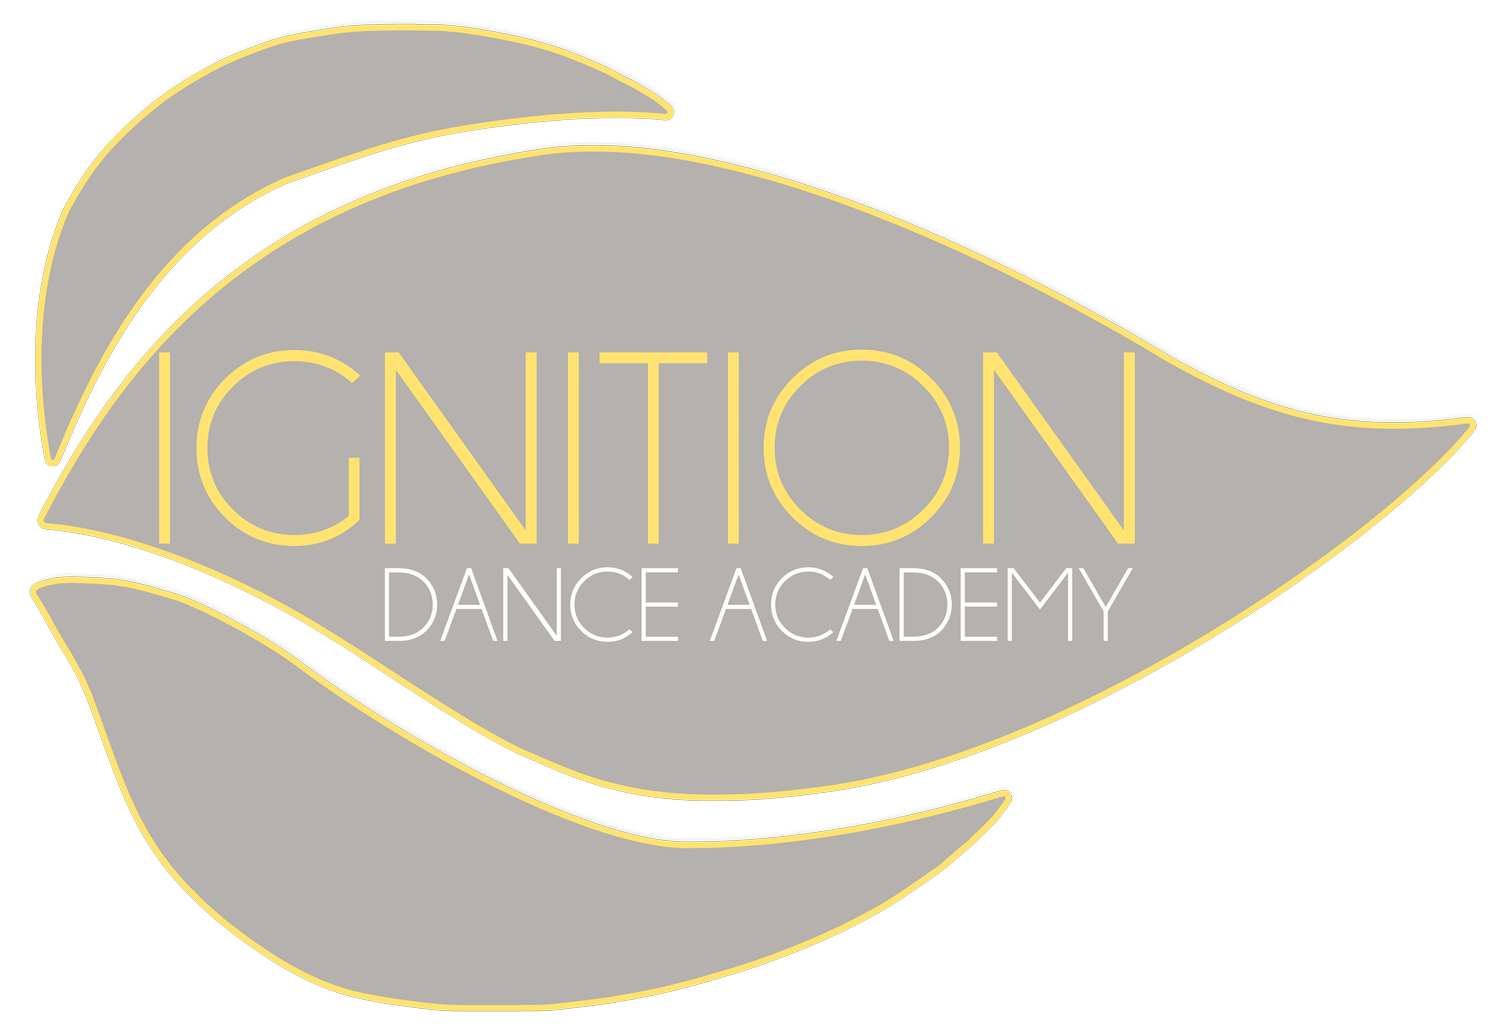 Ignition Dance Academy